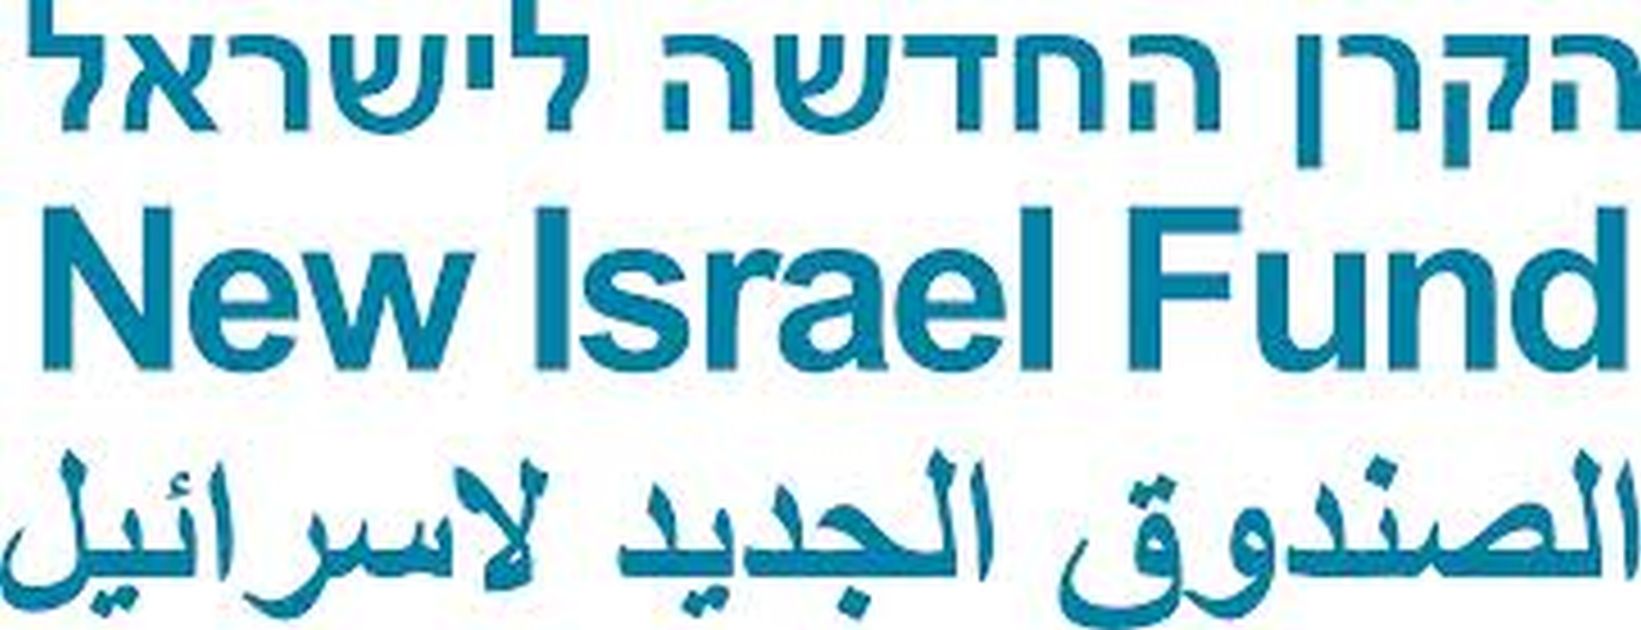 New Israel Fund Grant Writer Struggling To Make Office Supplies Sound Anti-Zionist